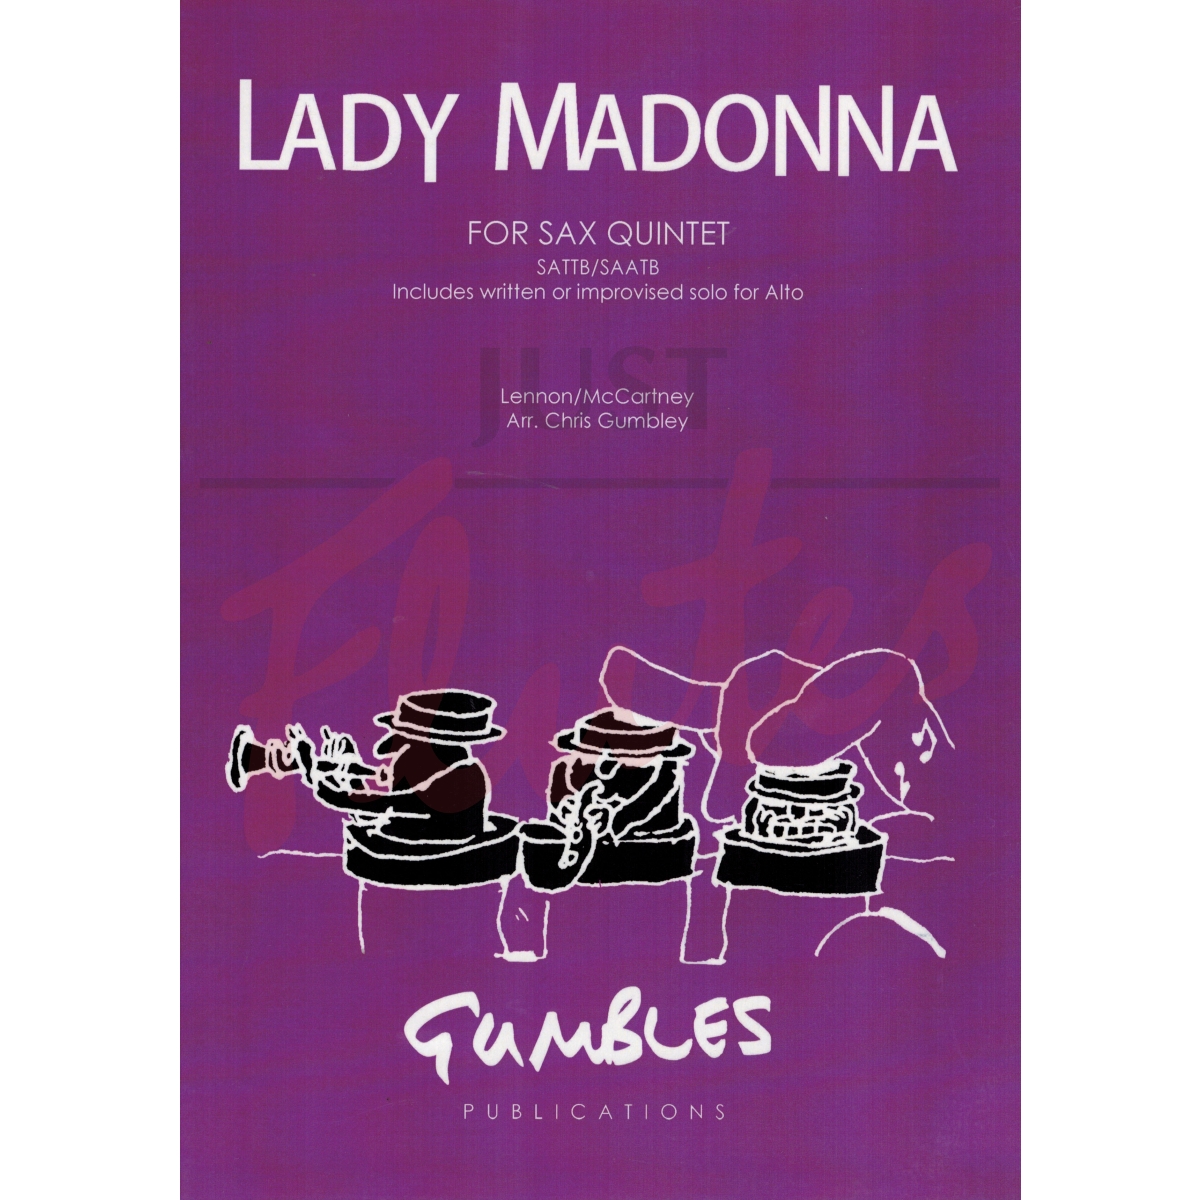 Lady Madonna for Sax Quintet